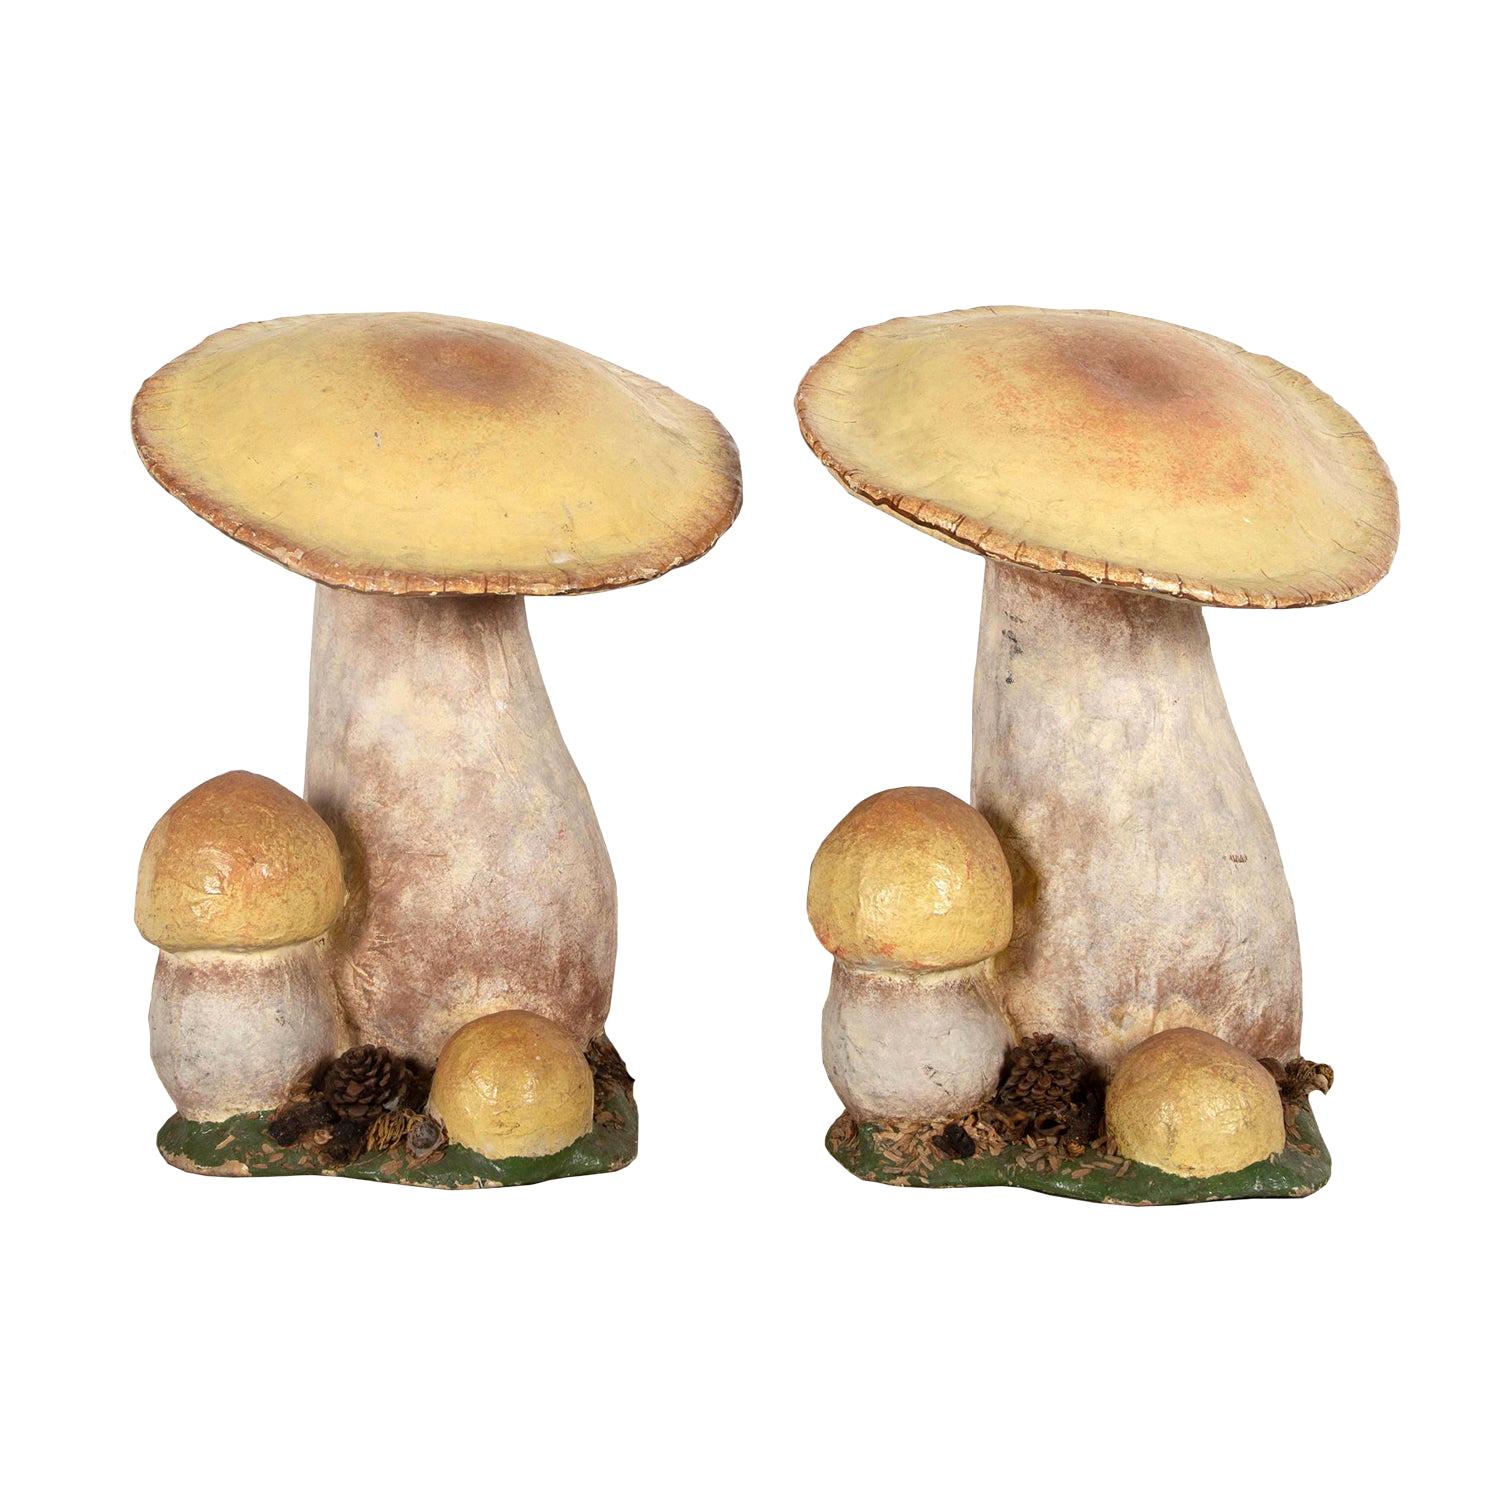 Pair of Large Shop Display Papier Mache Mushrooms